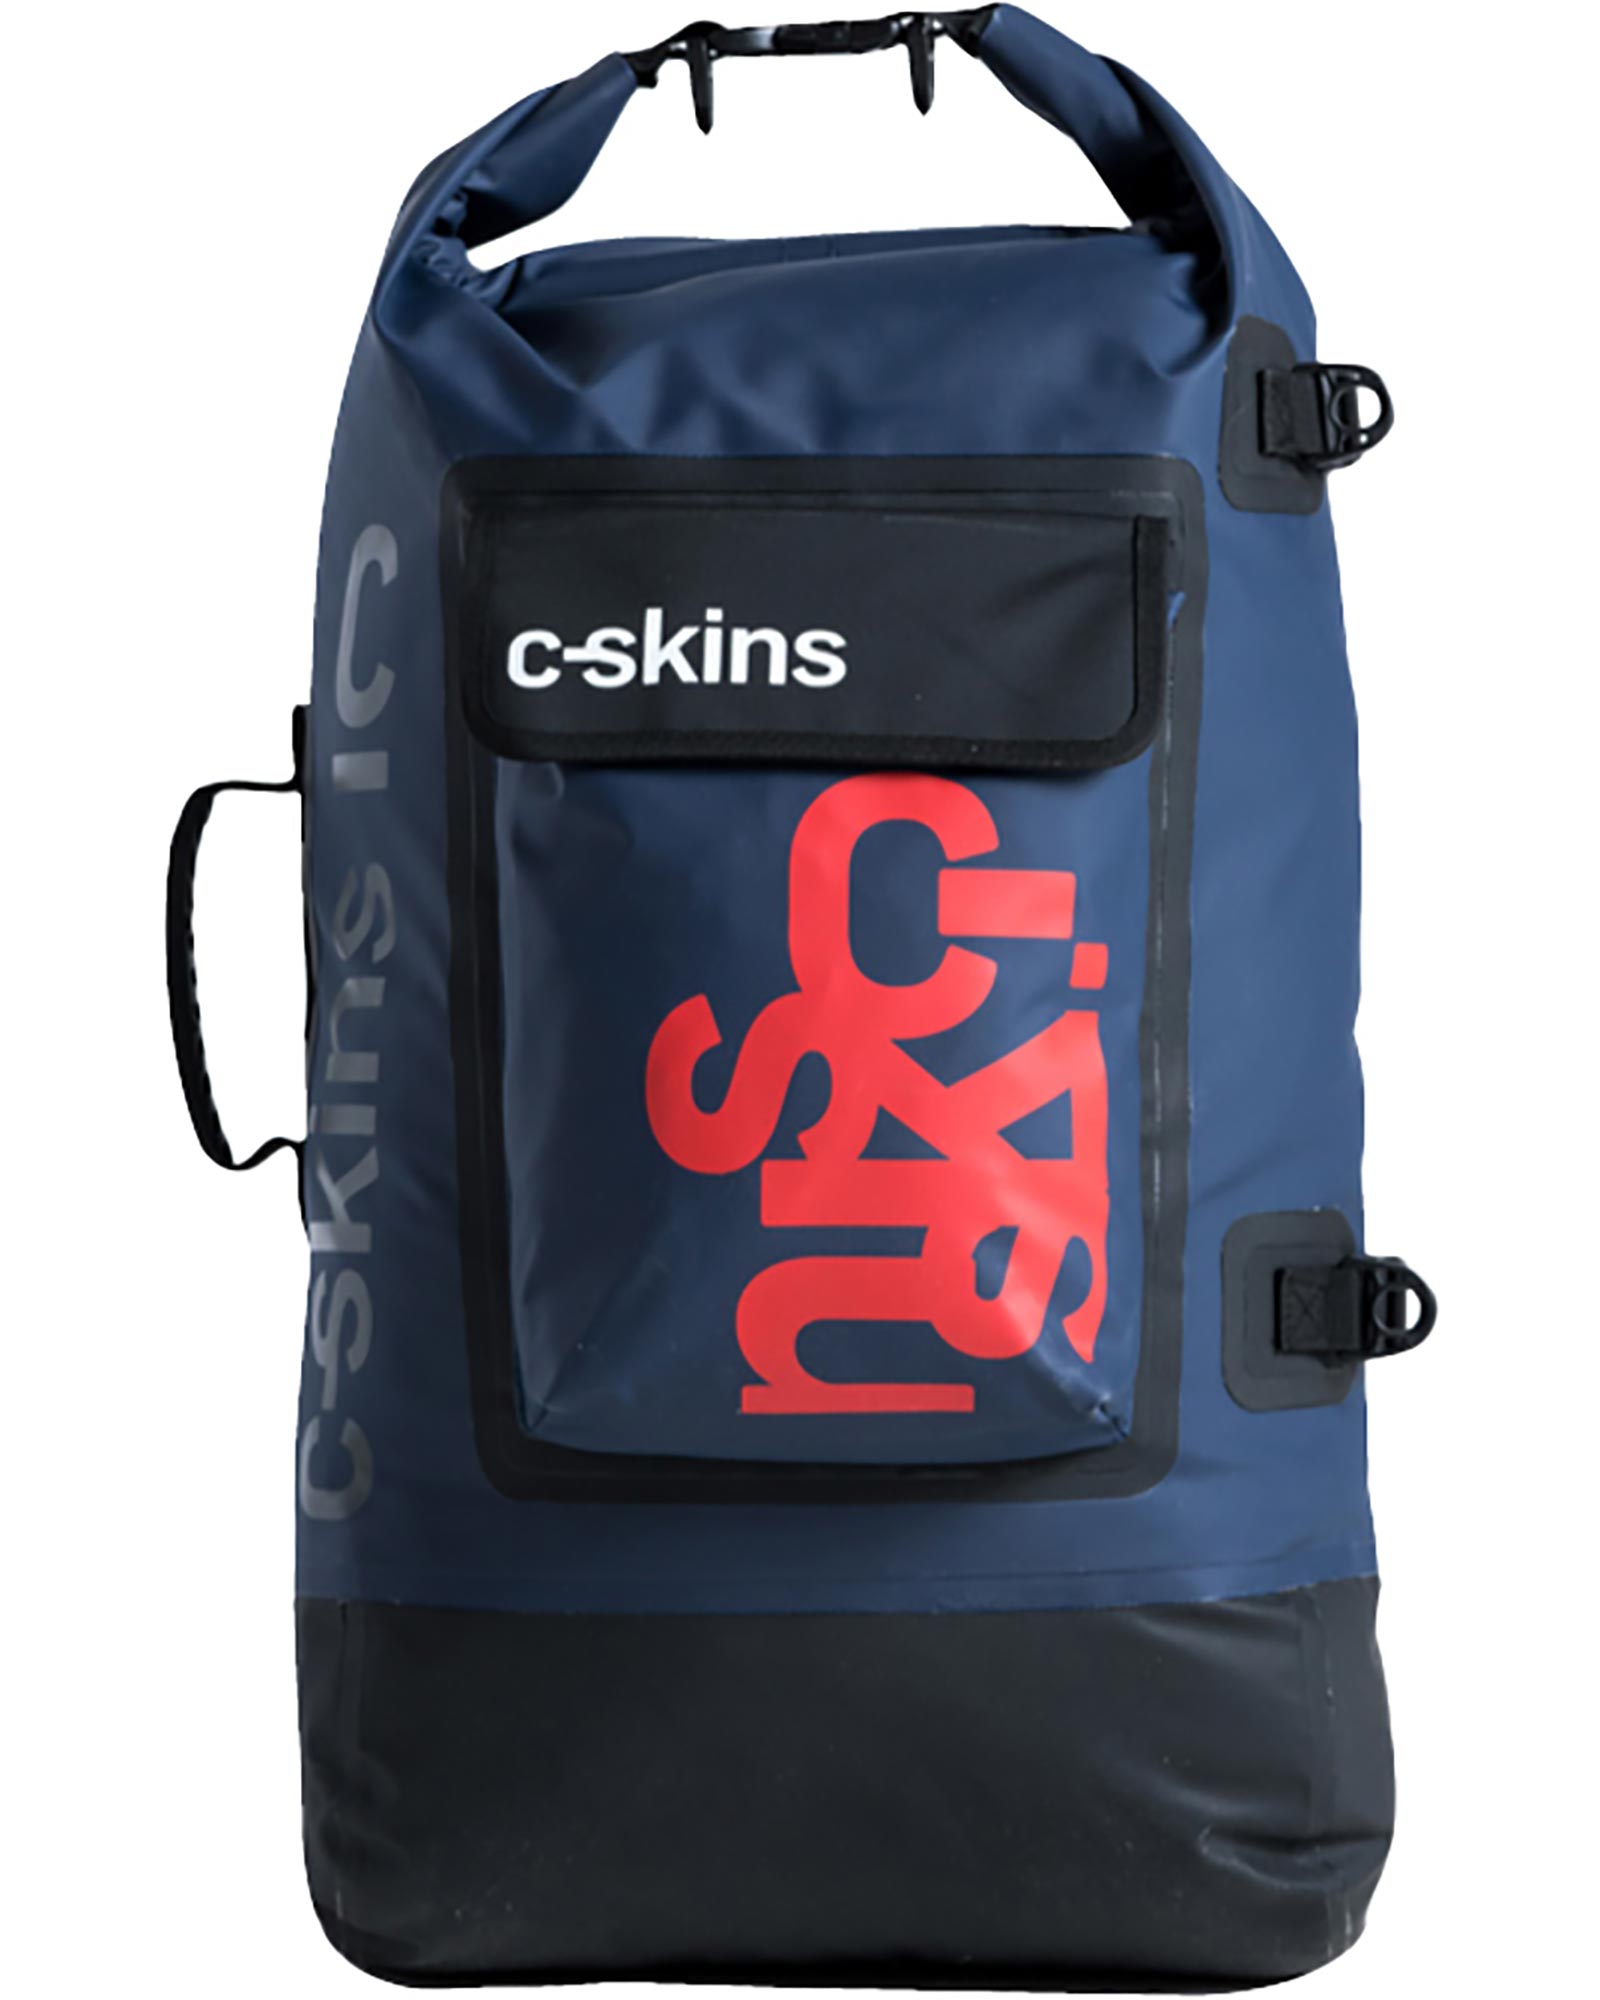 C-skins Stormchaser Drybag 40l